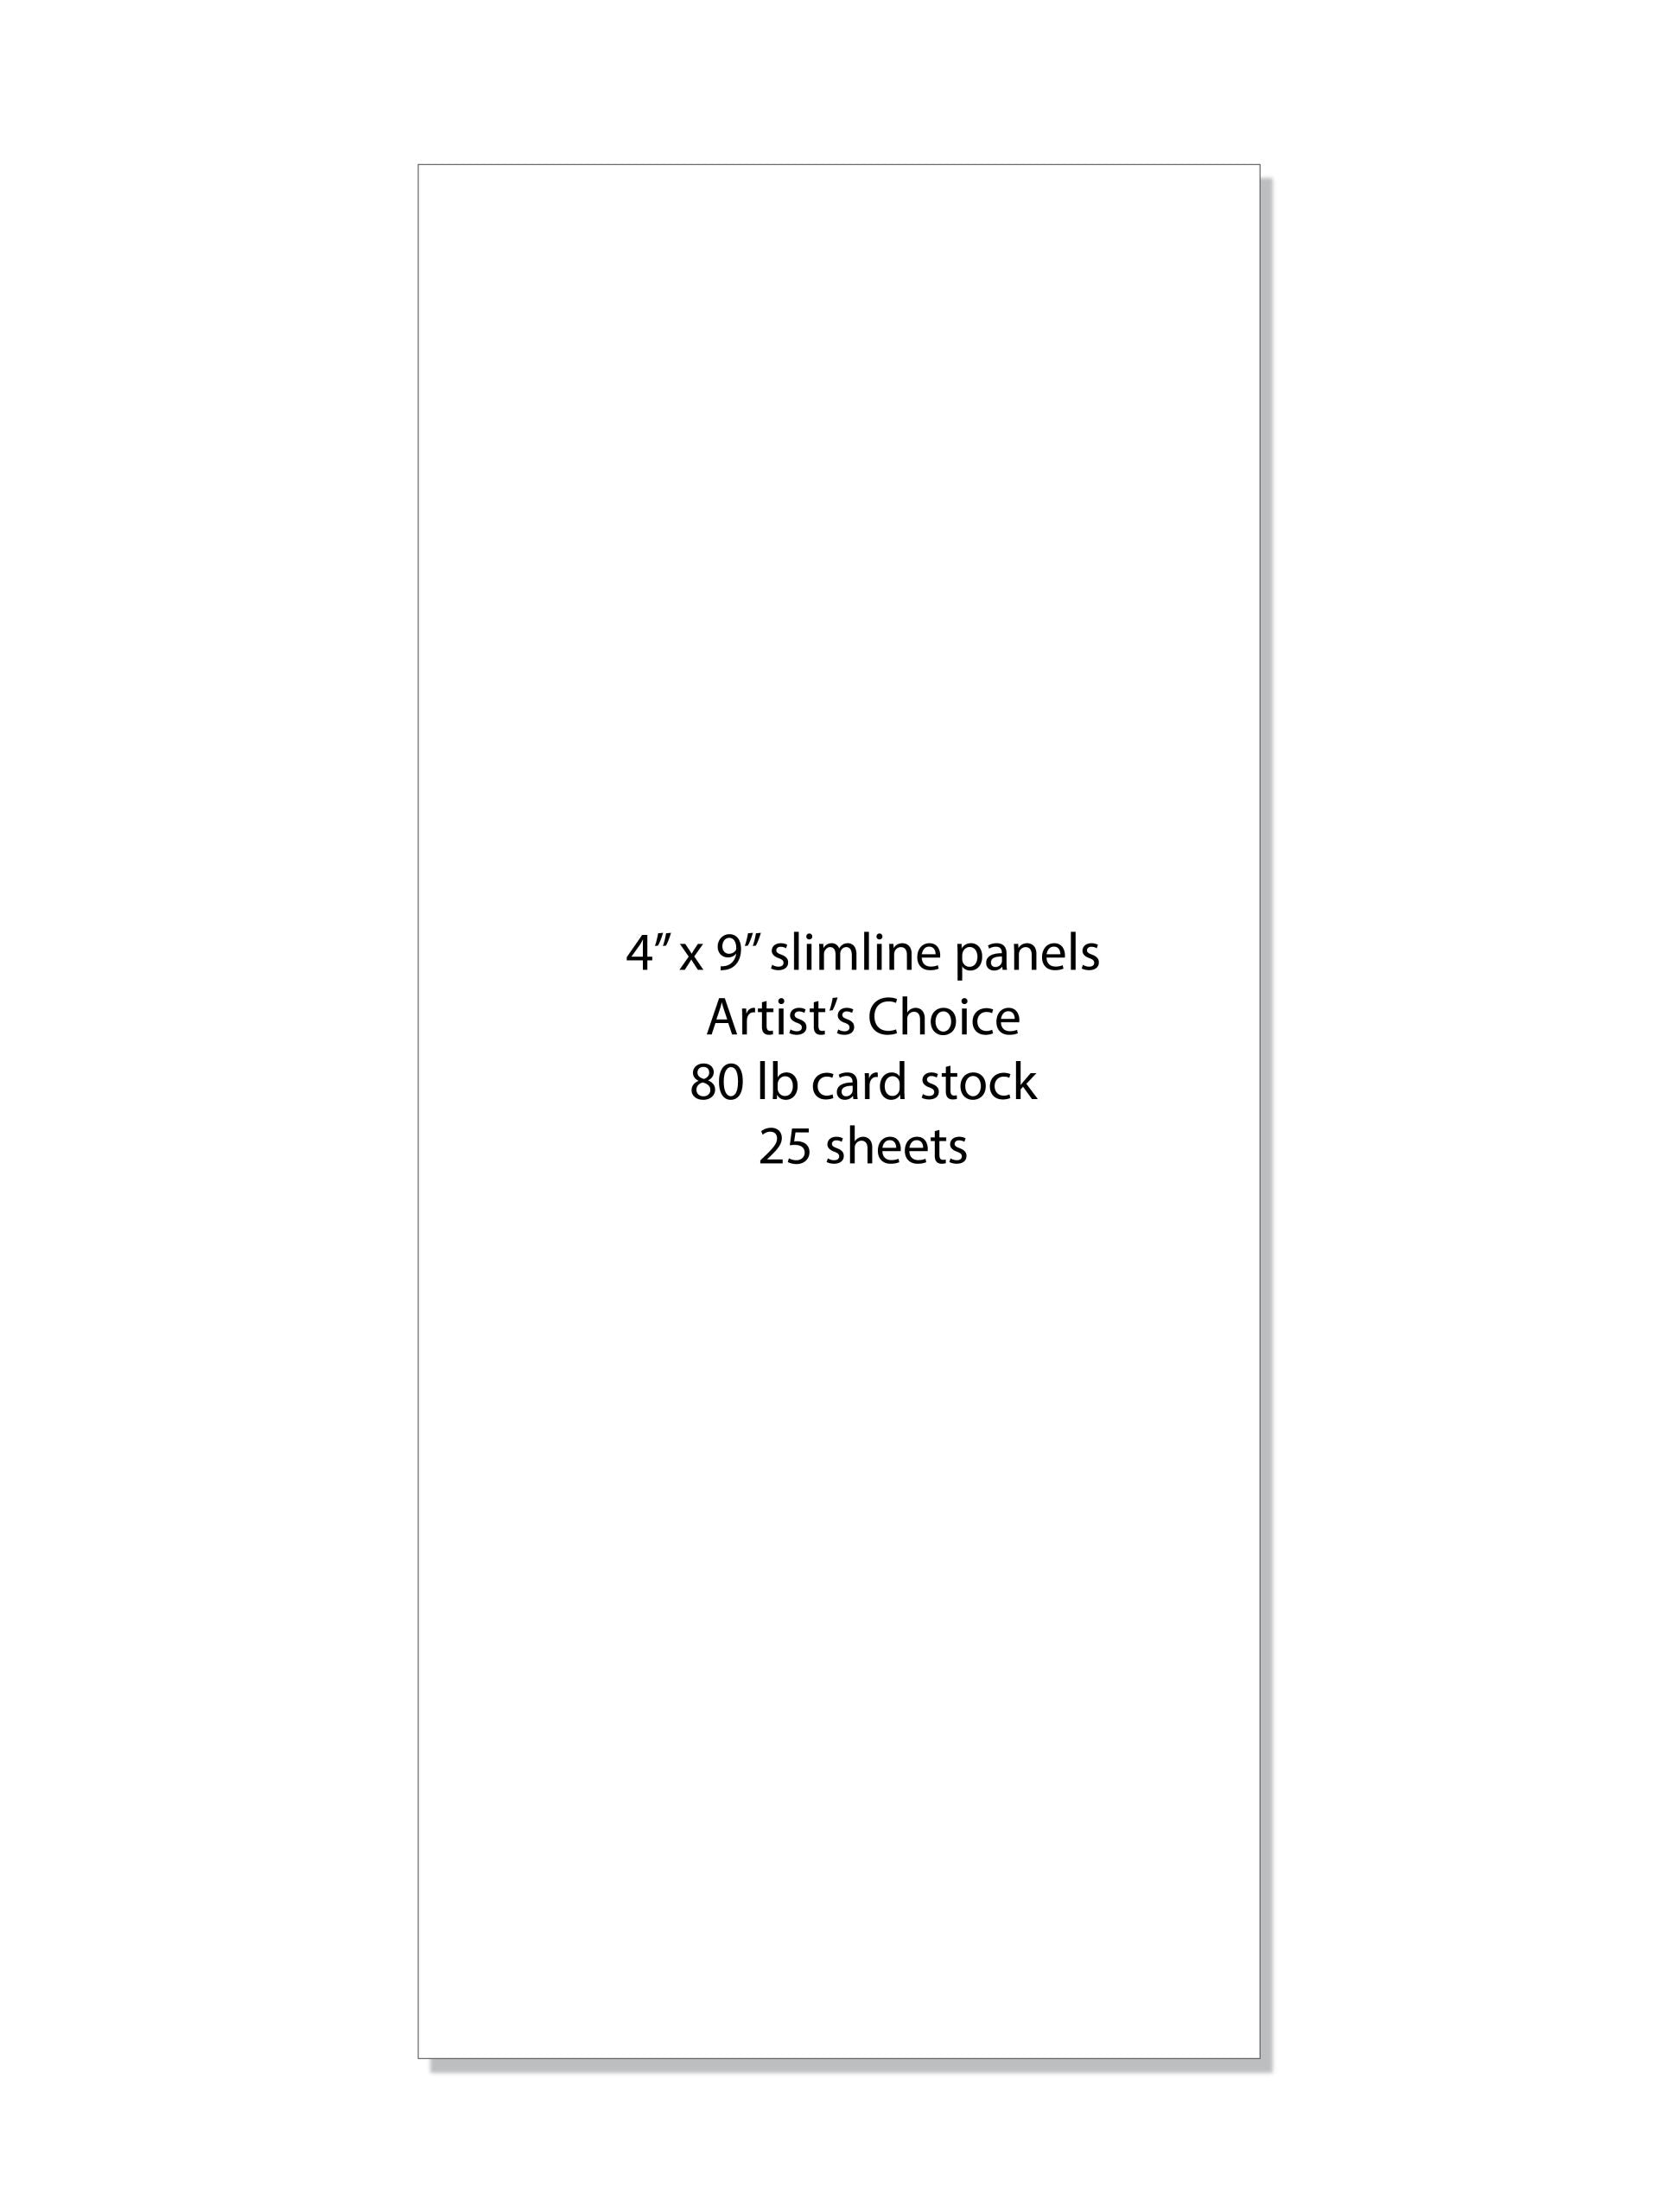 CARD STOCK PANELS- Artist's Choice Layering Weight Slimline 4 x 9